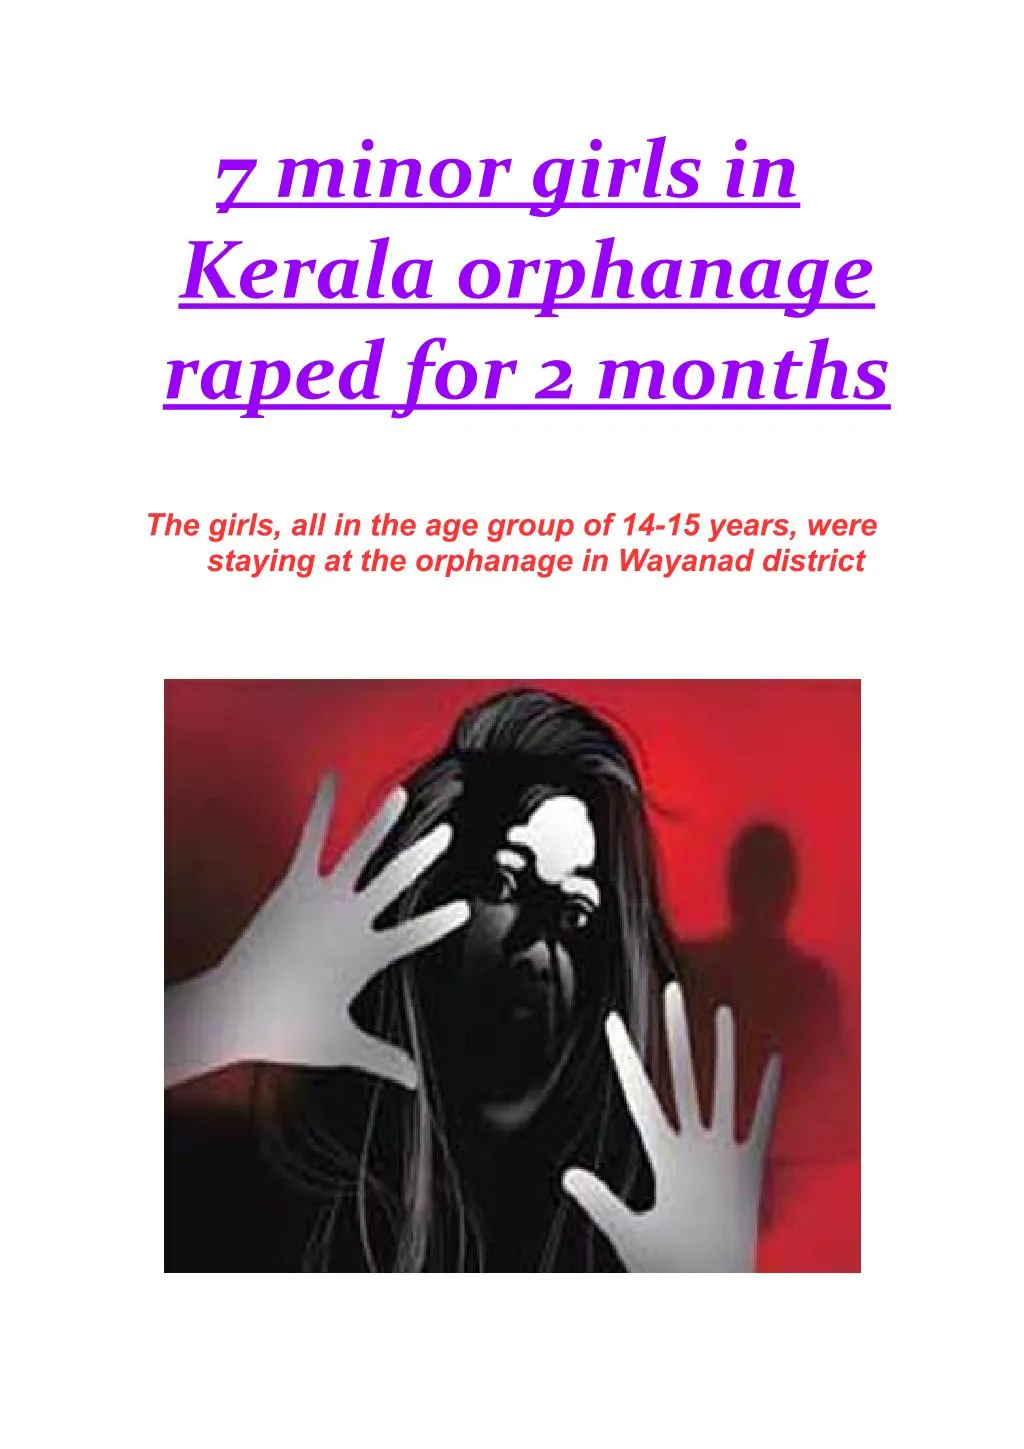 7 minor girls in kerala orphanage raped